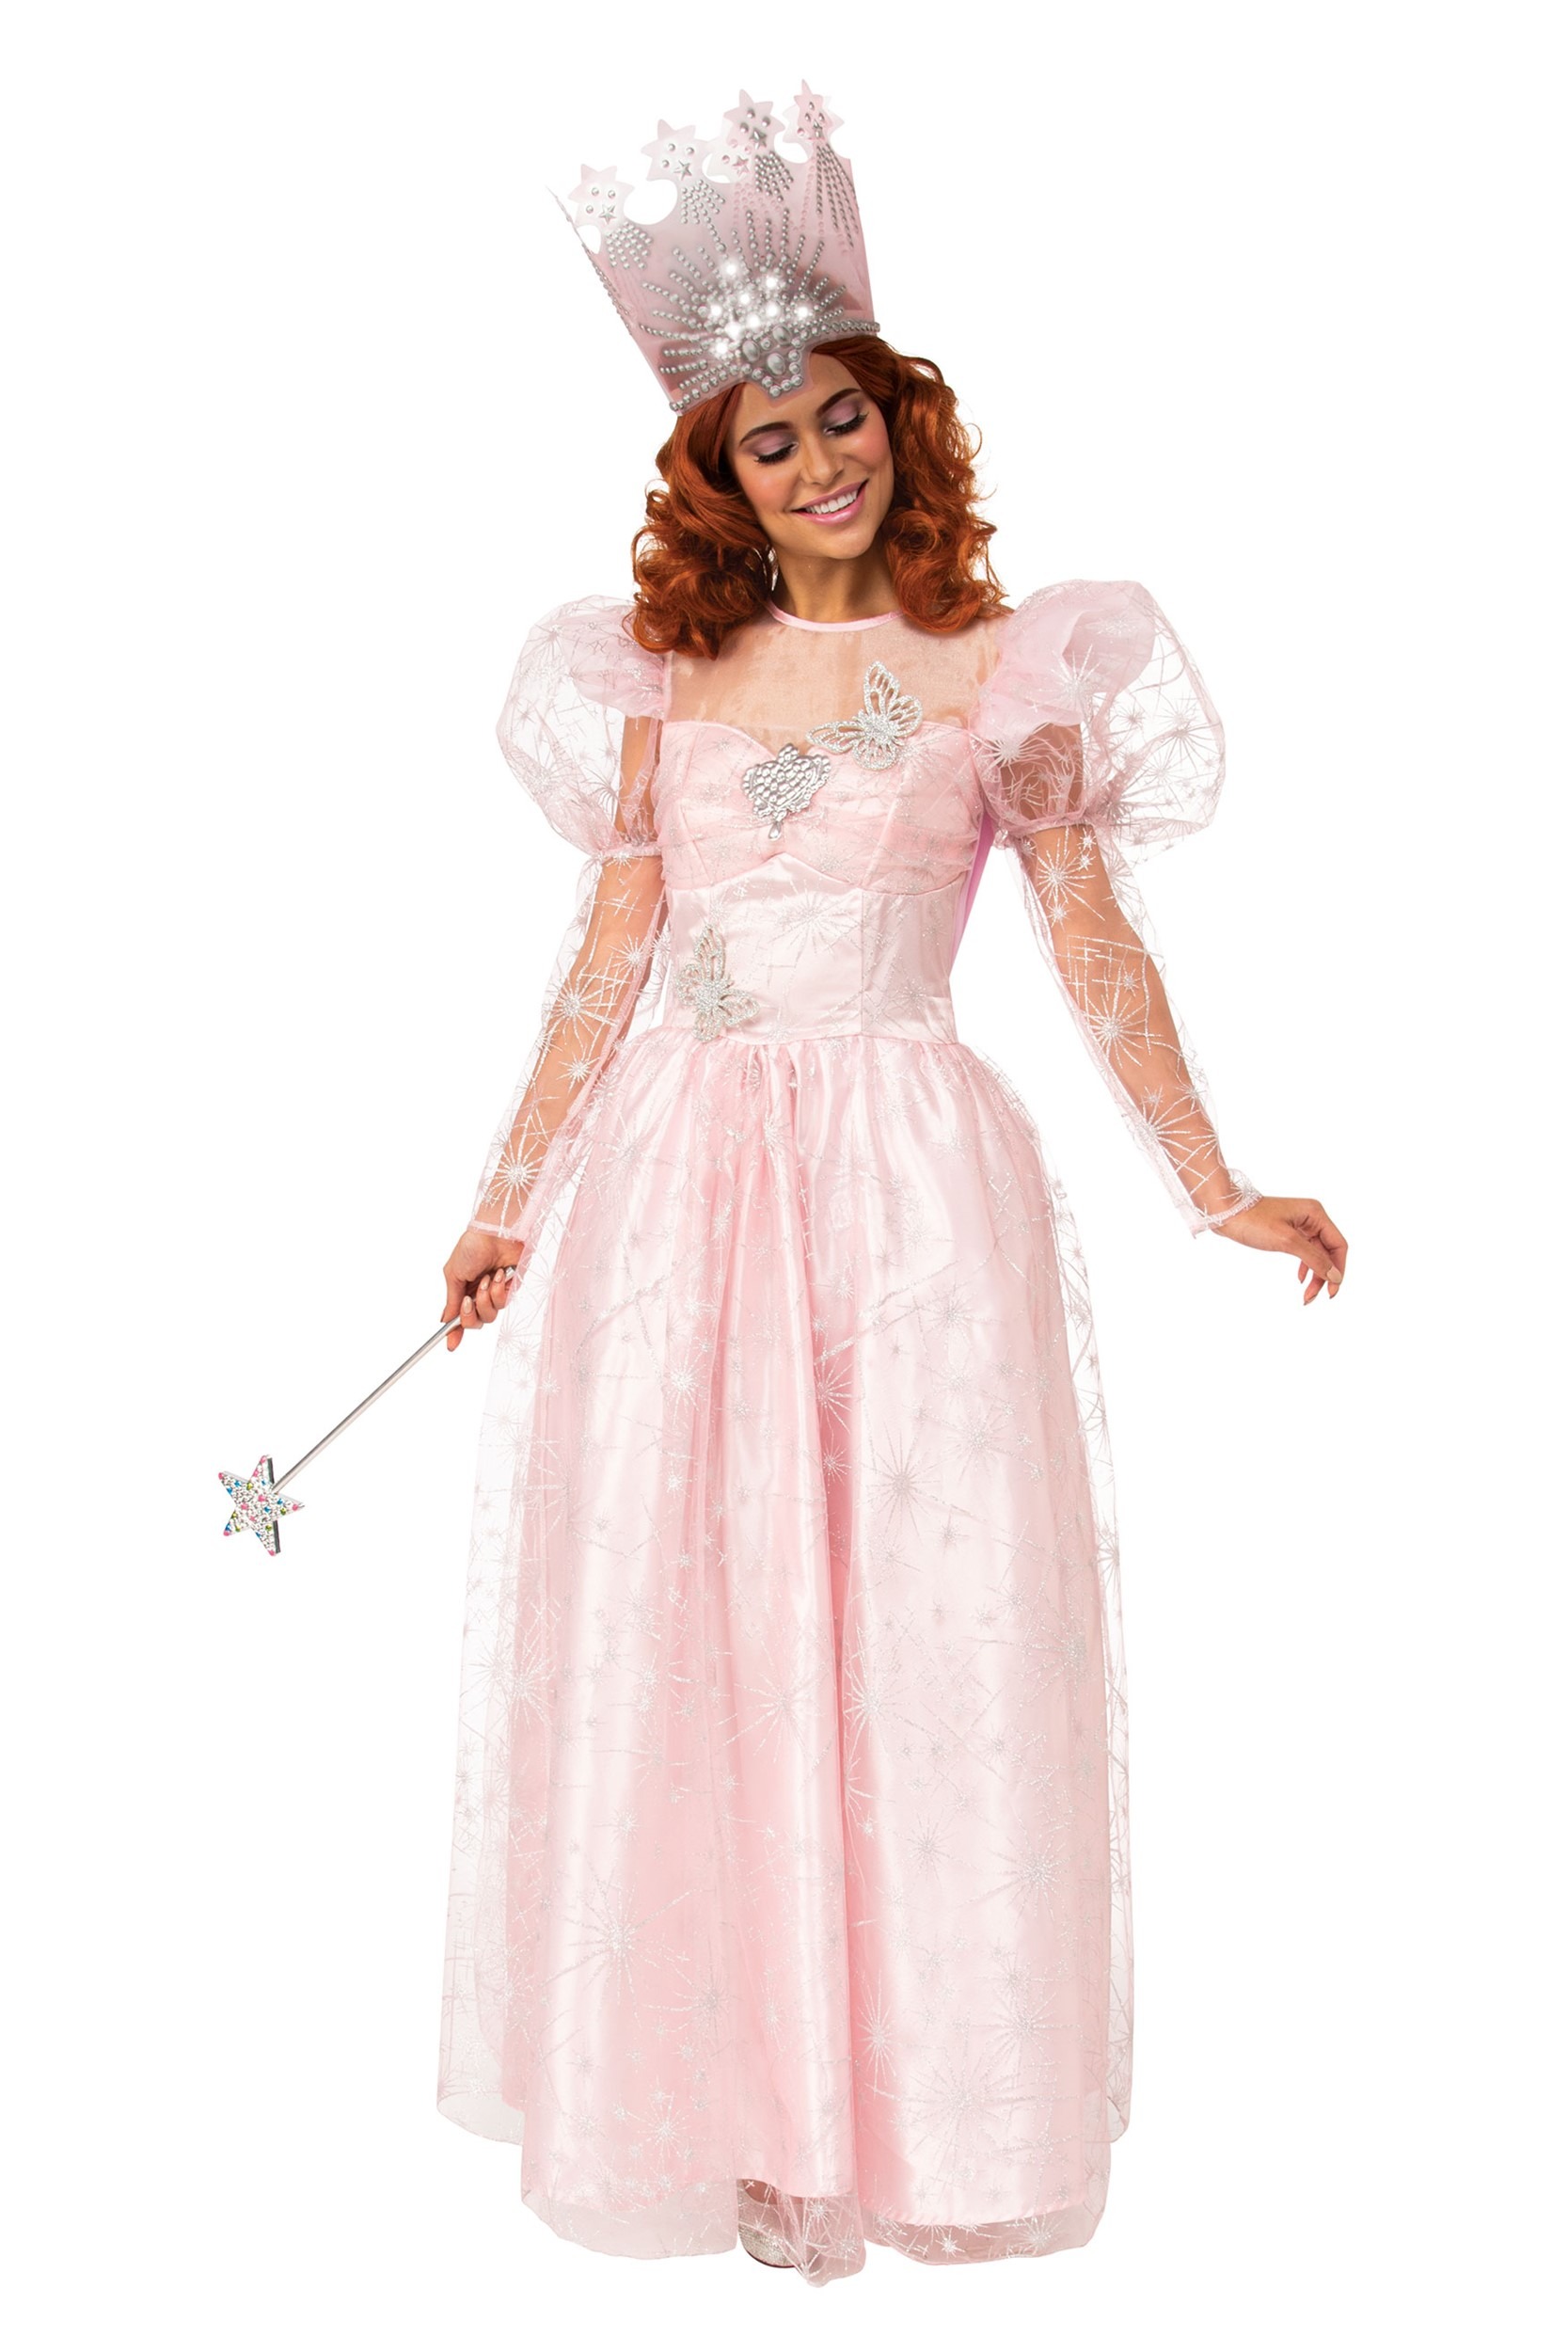 Glindathe Good Witch Deluxe Women's Fancy Dress Costume